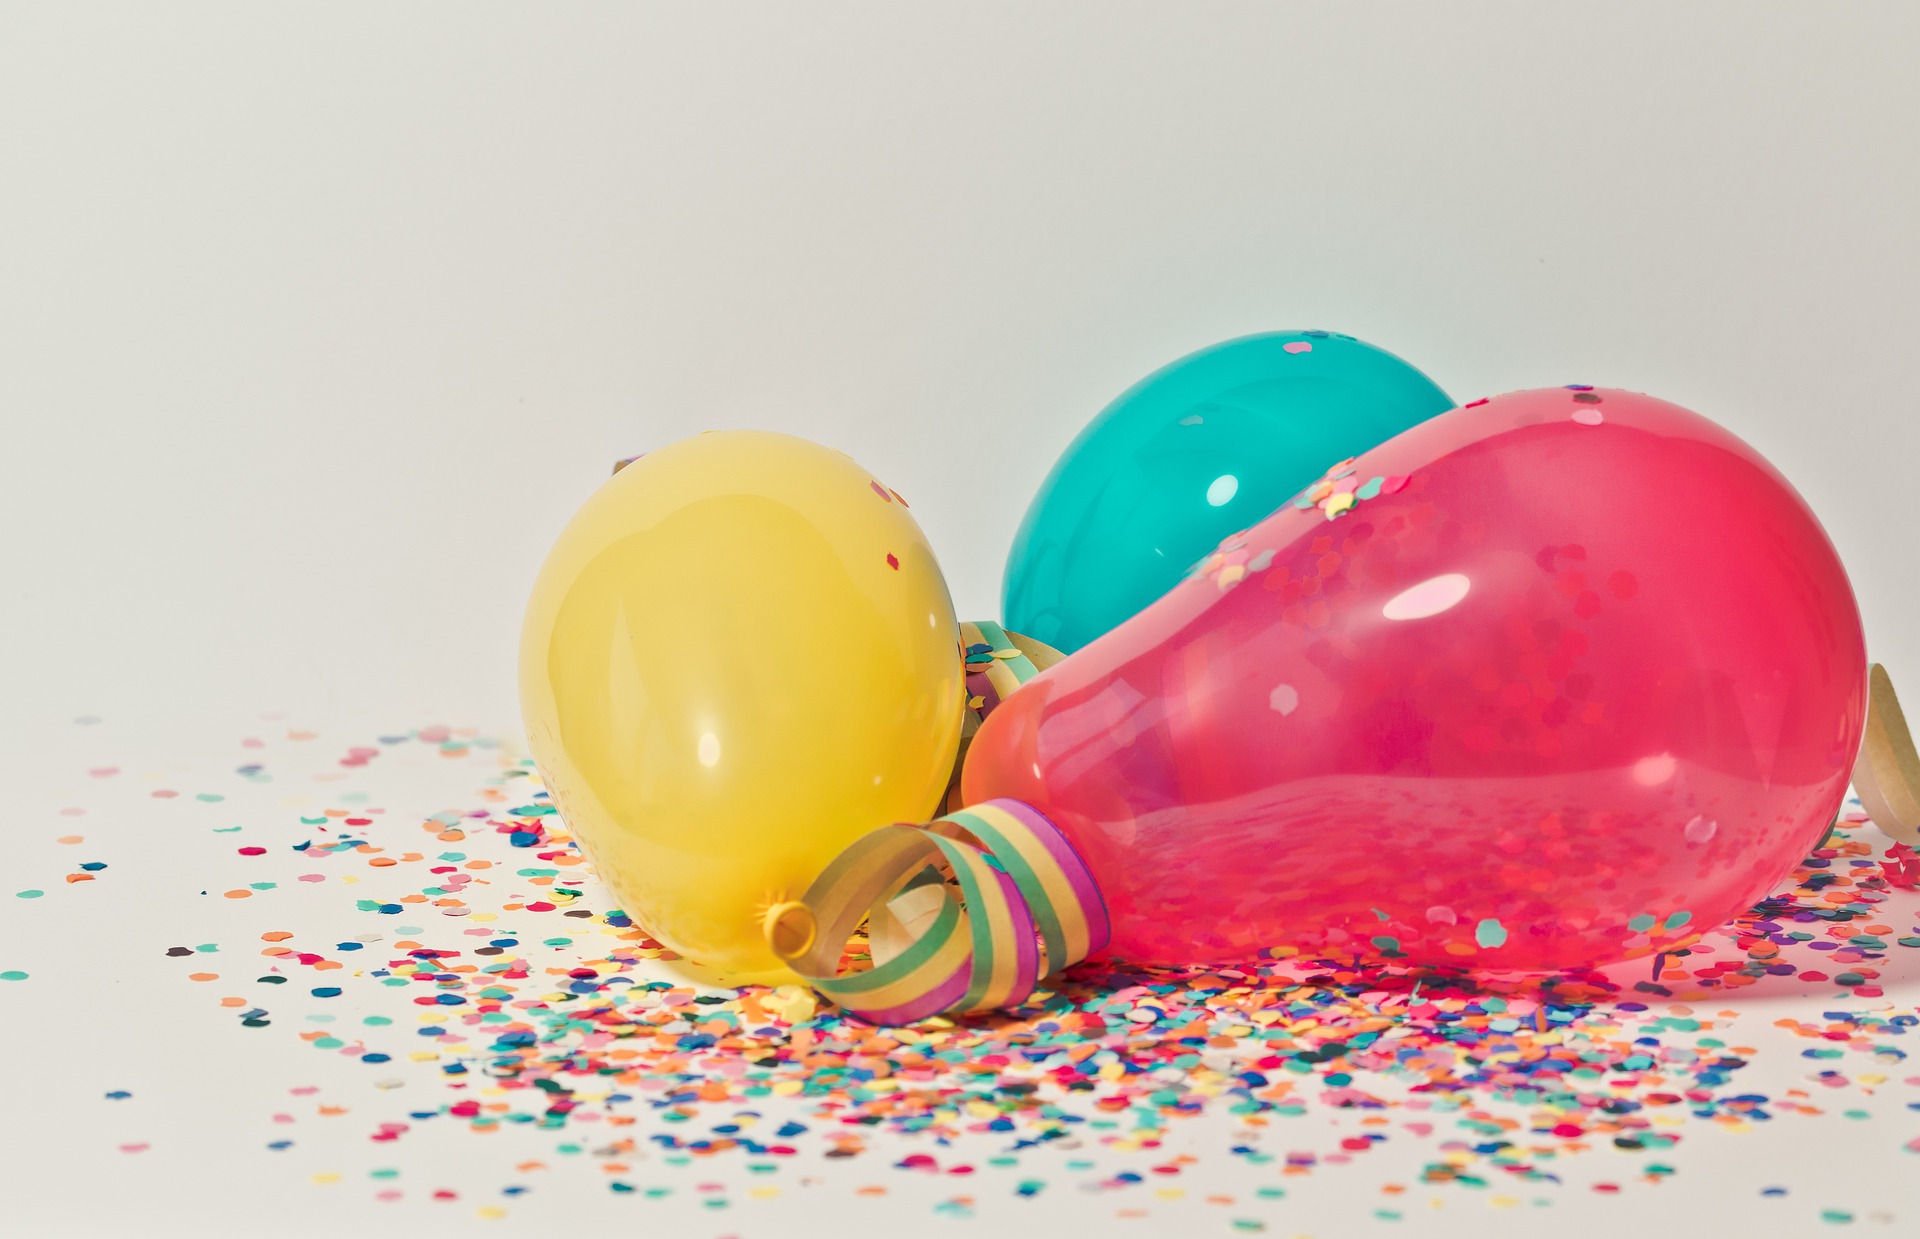 Balony leżące na konfetti